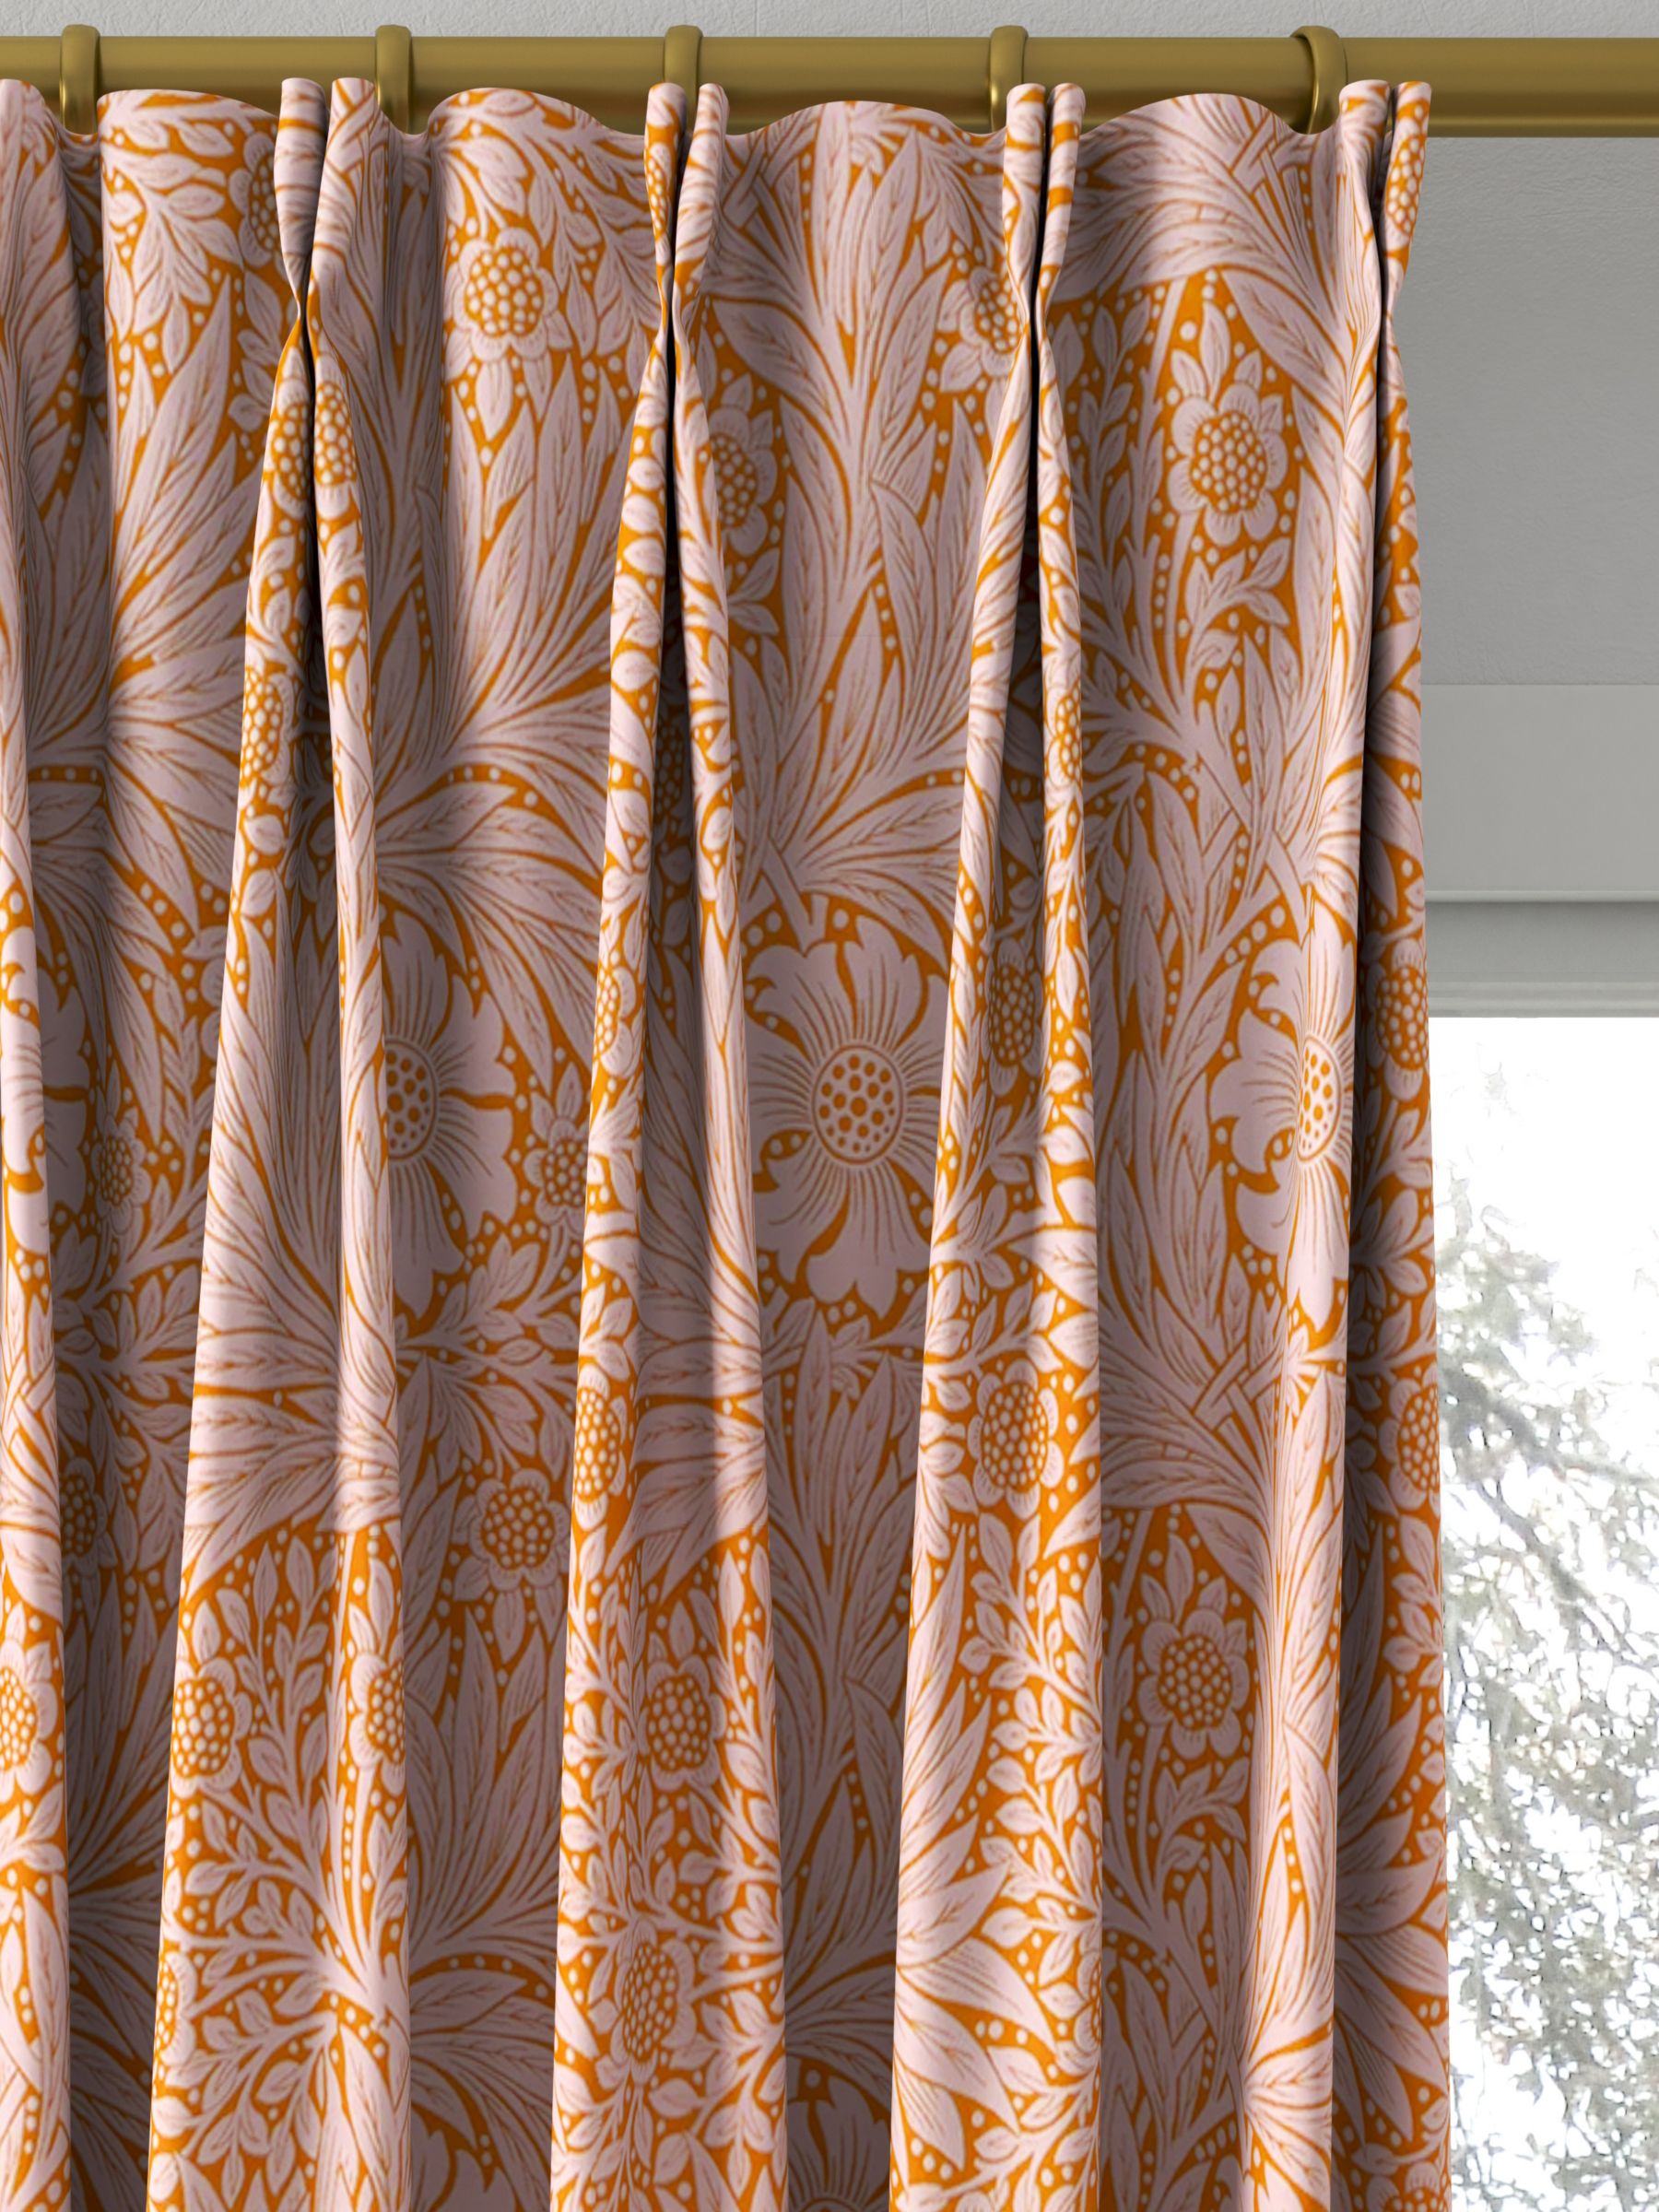 Morris & Co. Ben Pentreath Marigold Made to Measure Curtains, Orange/Pink